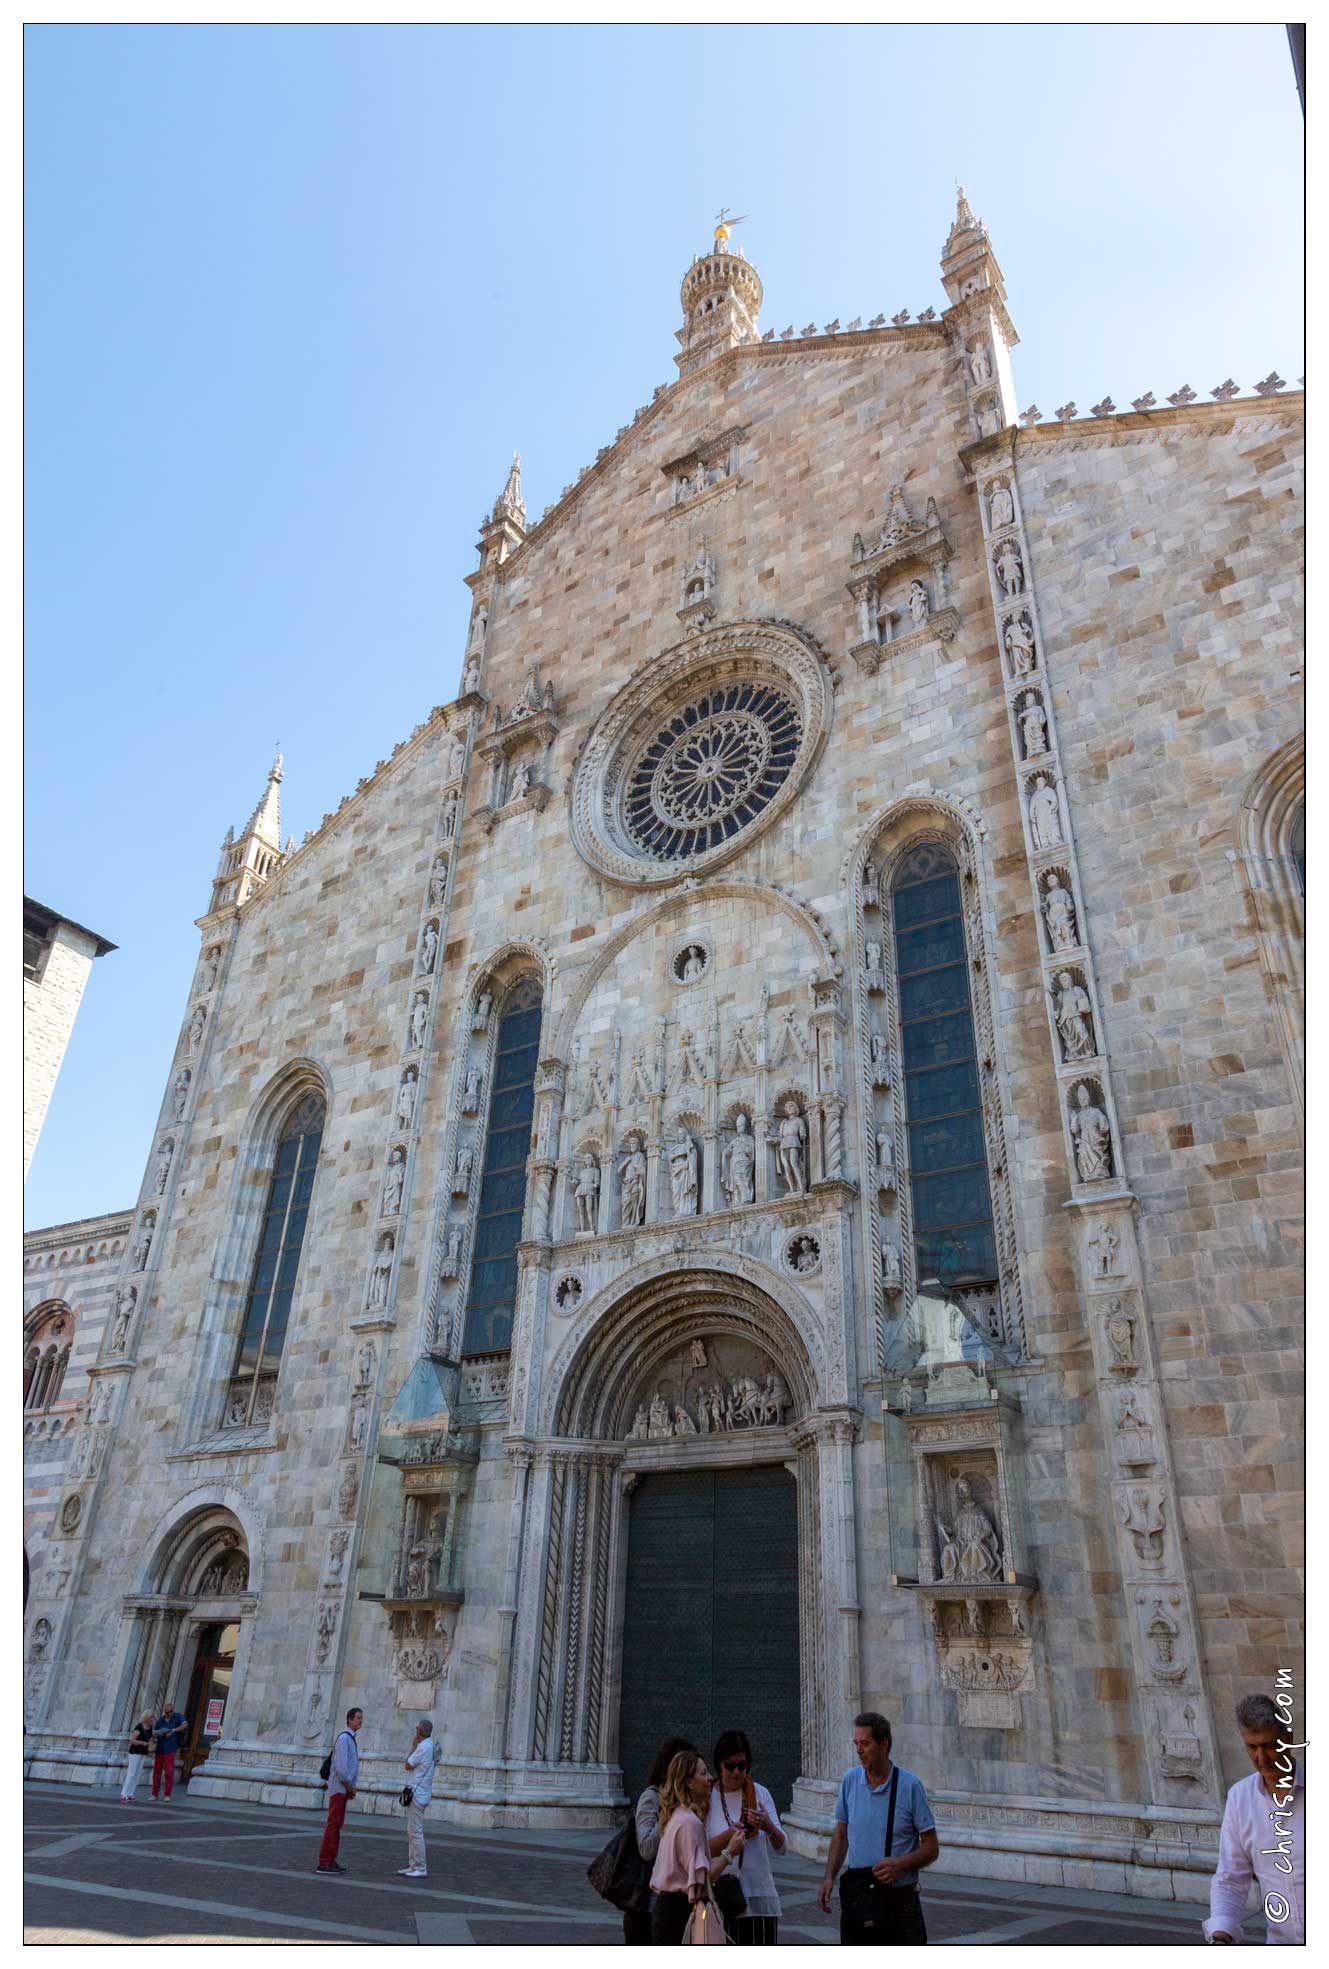 20190602-025_6553-Come_Cathedrale_di_Santa_Maria_Assunta.jpg